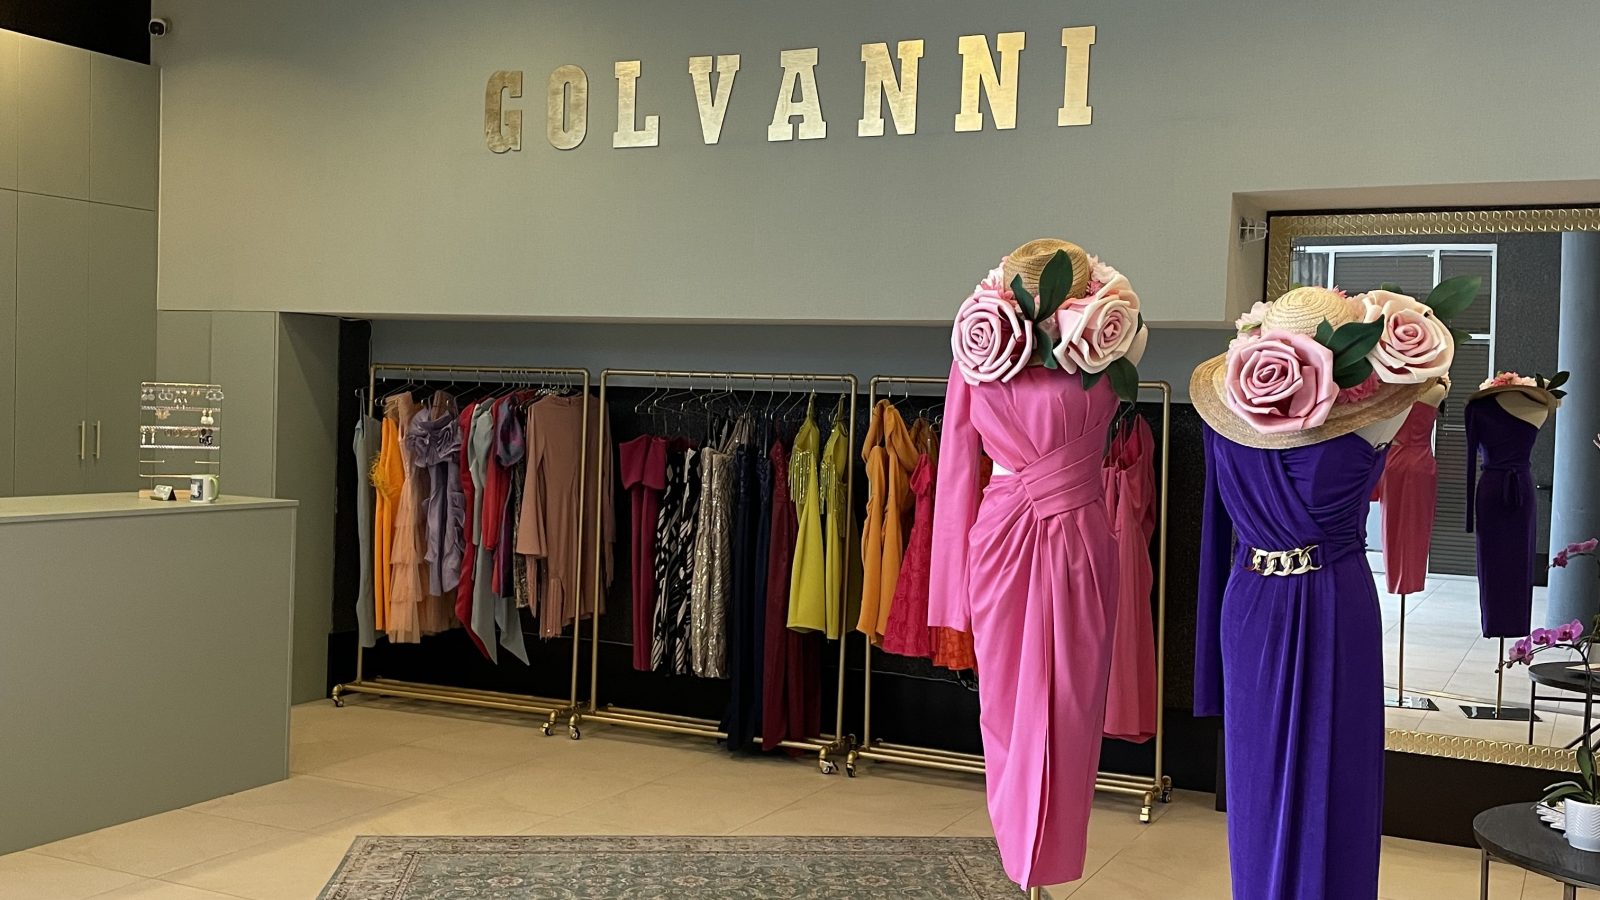 Golvanni fashion store in The Shipyards District